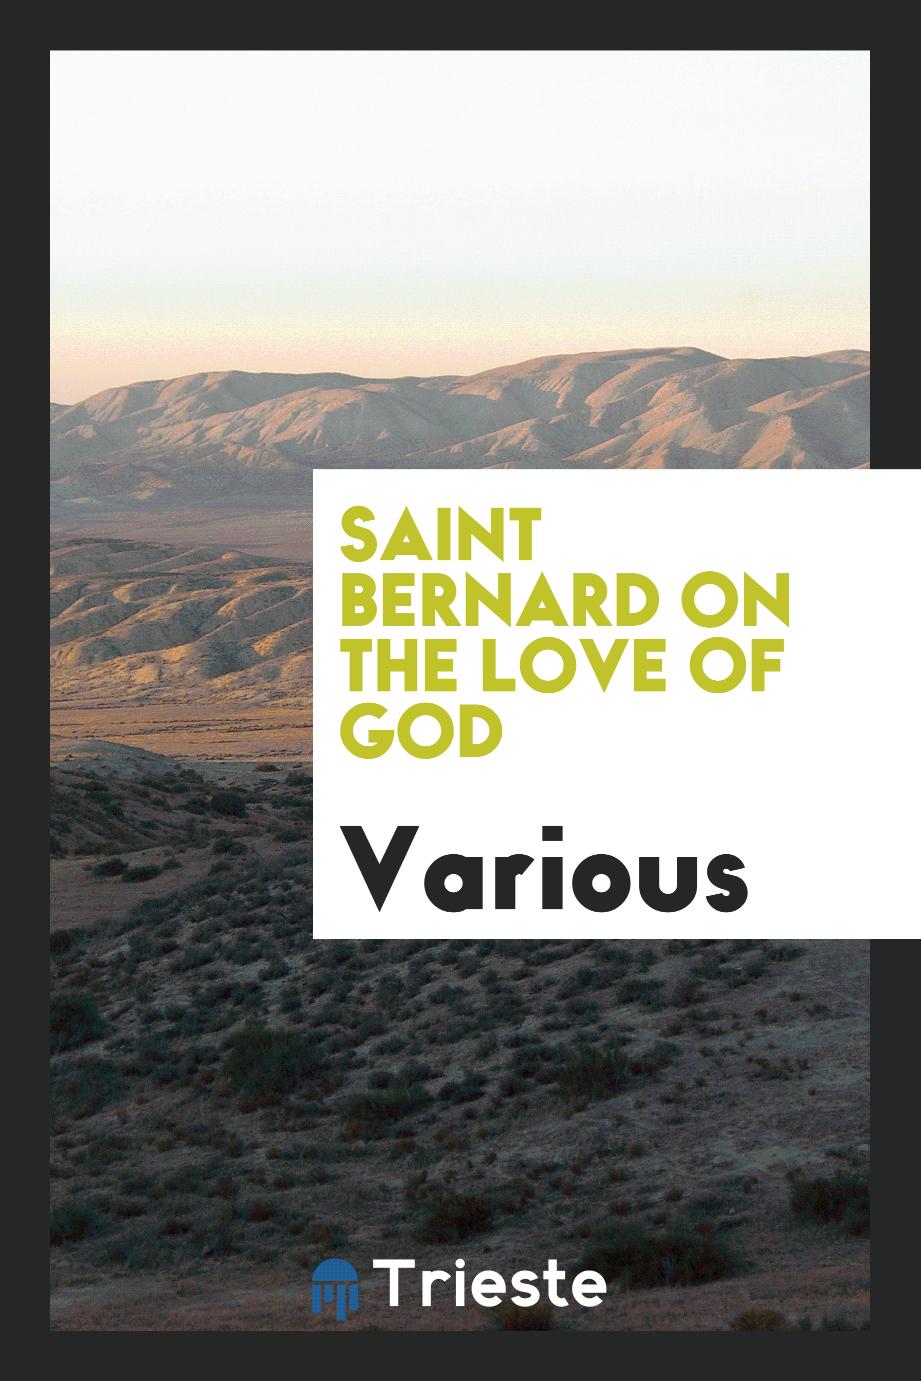 Saint Bernard on the love of God